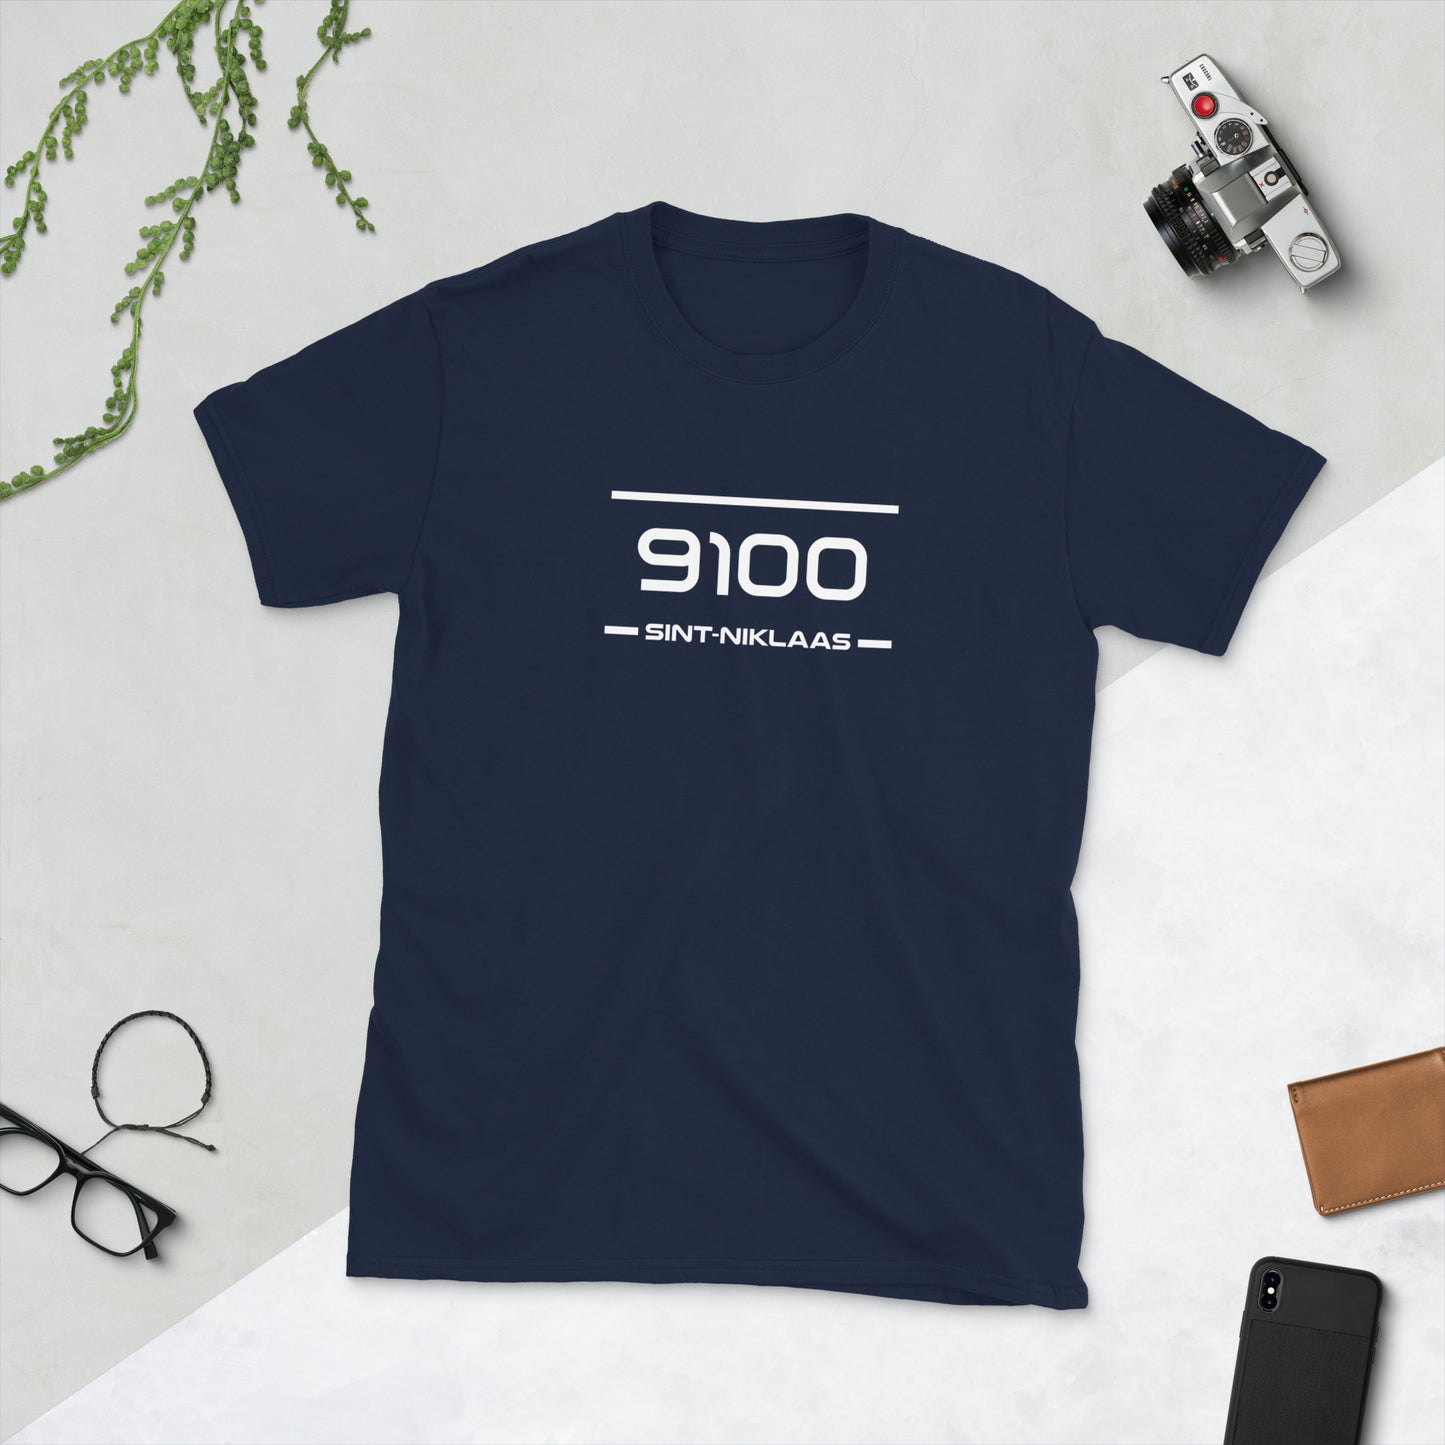 T-Shirt - 9100 - Sint-Niklaas